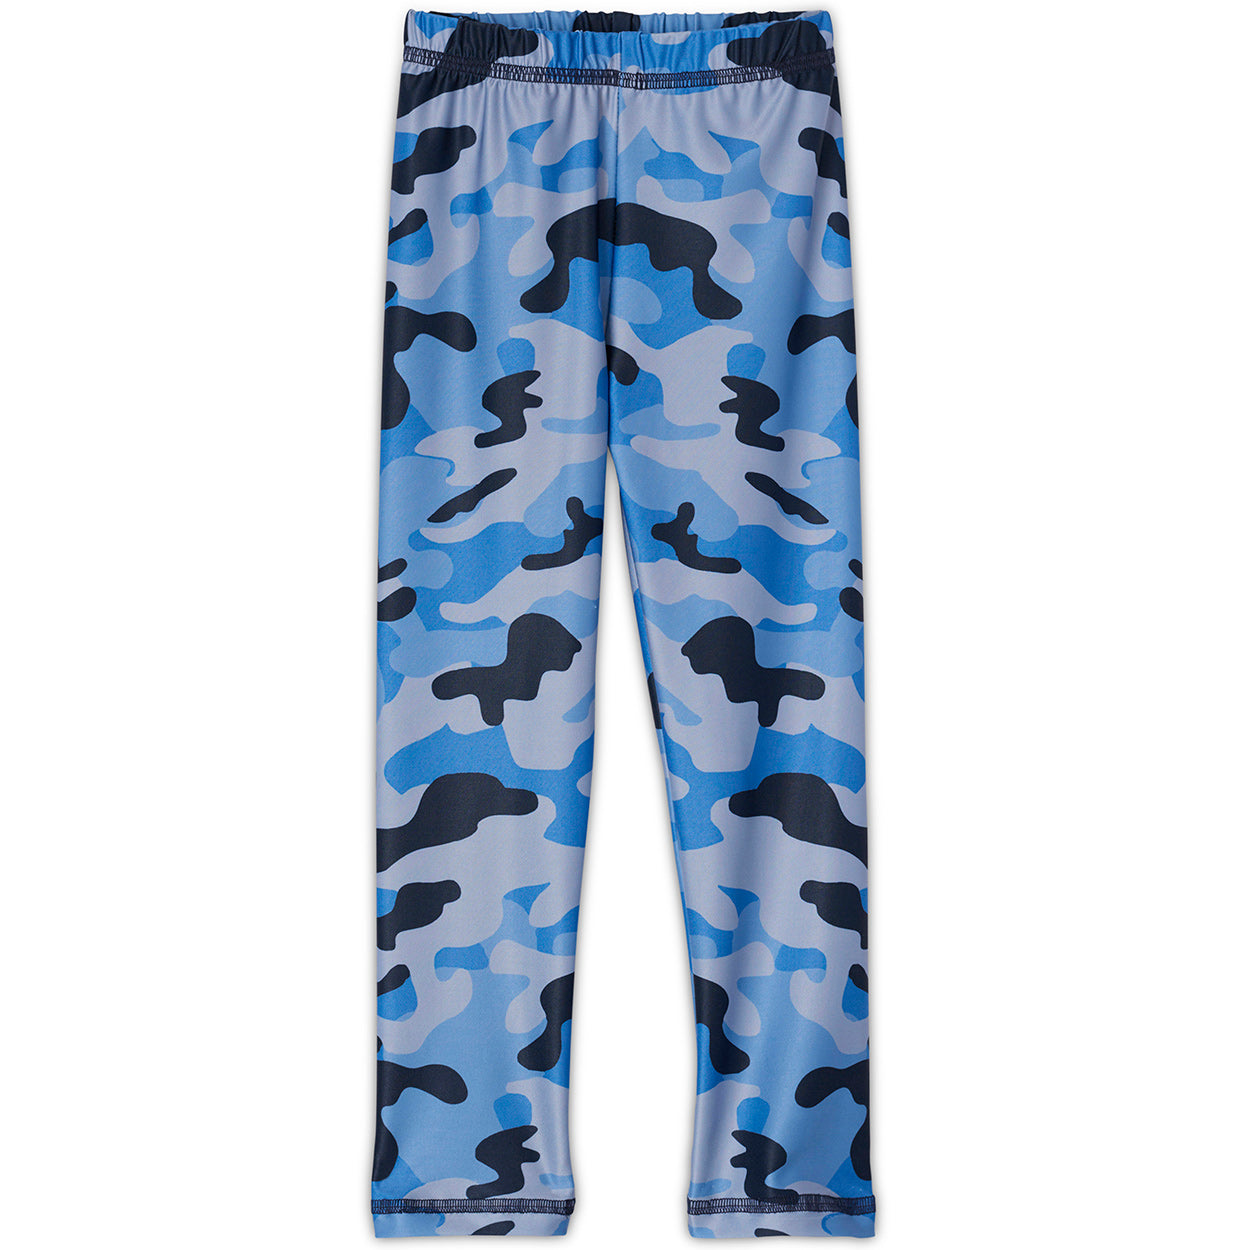 Satori_Stylez Urban Camo Leggings for Men Printed Blue Camouflage Pattern  Print Workout Gym Meggings at Amazon Men's Clothing store